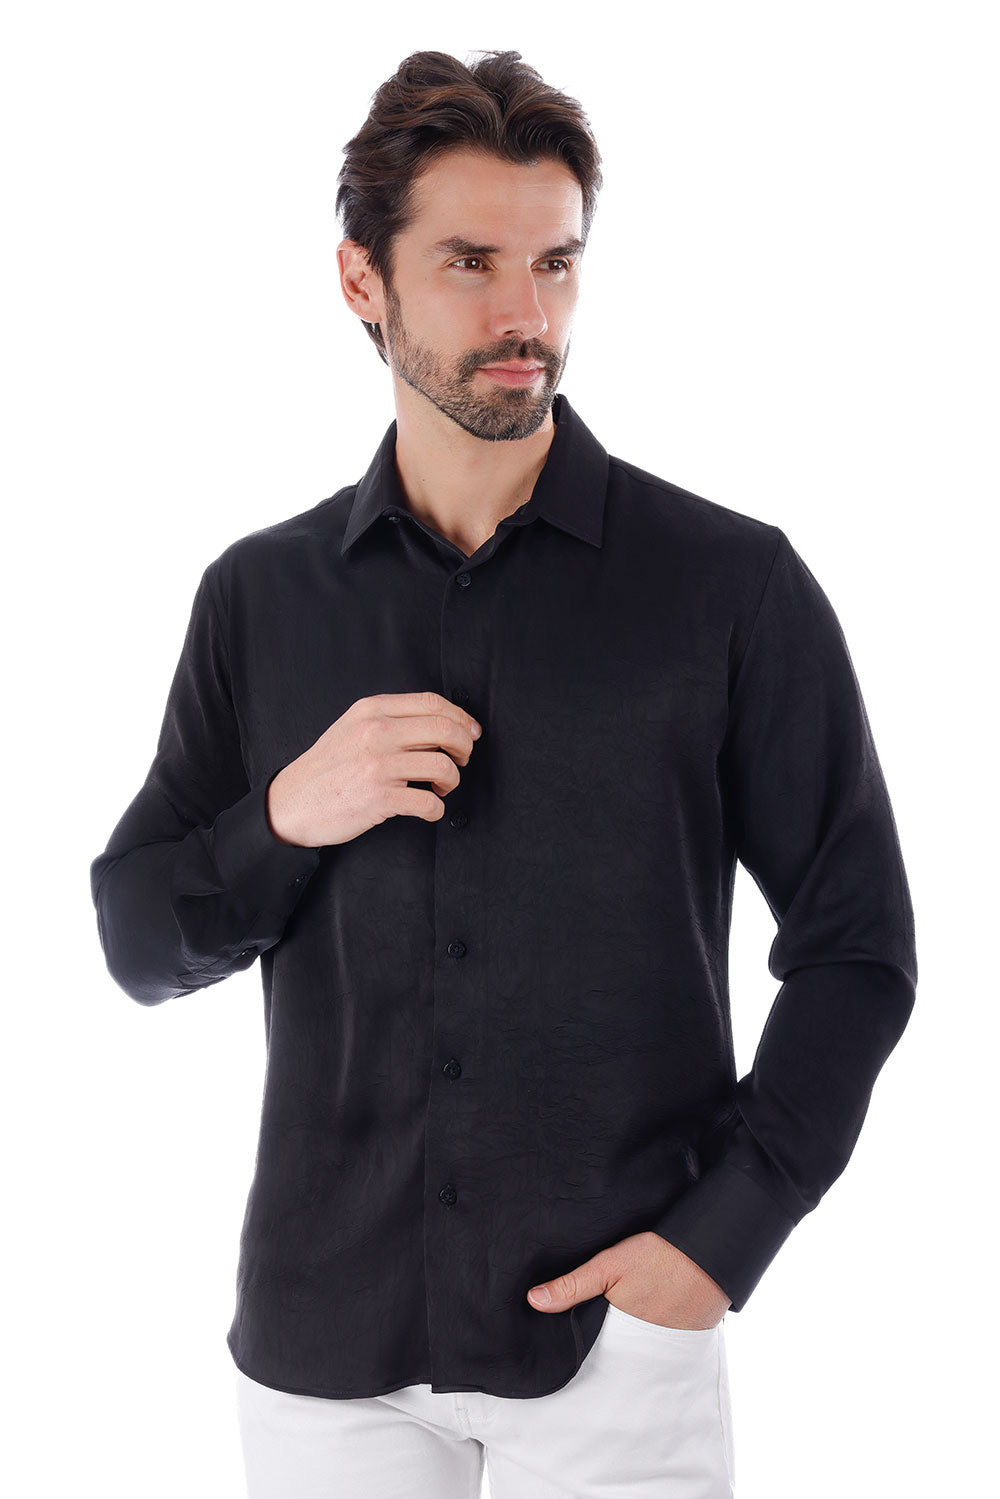 BARABAS Men's Textured Stretch Button Down Long Sleeve Shirt 4B34 Black